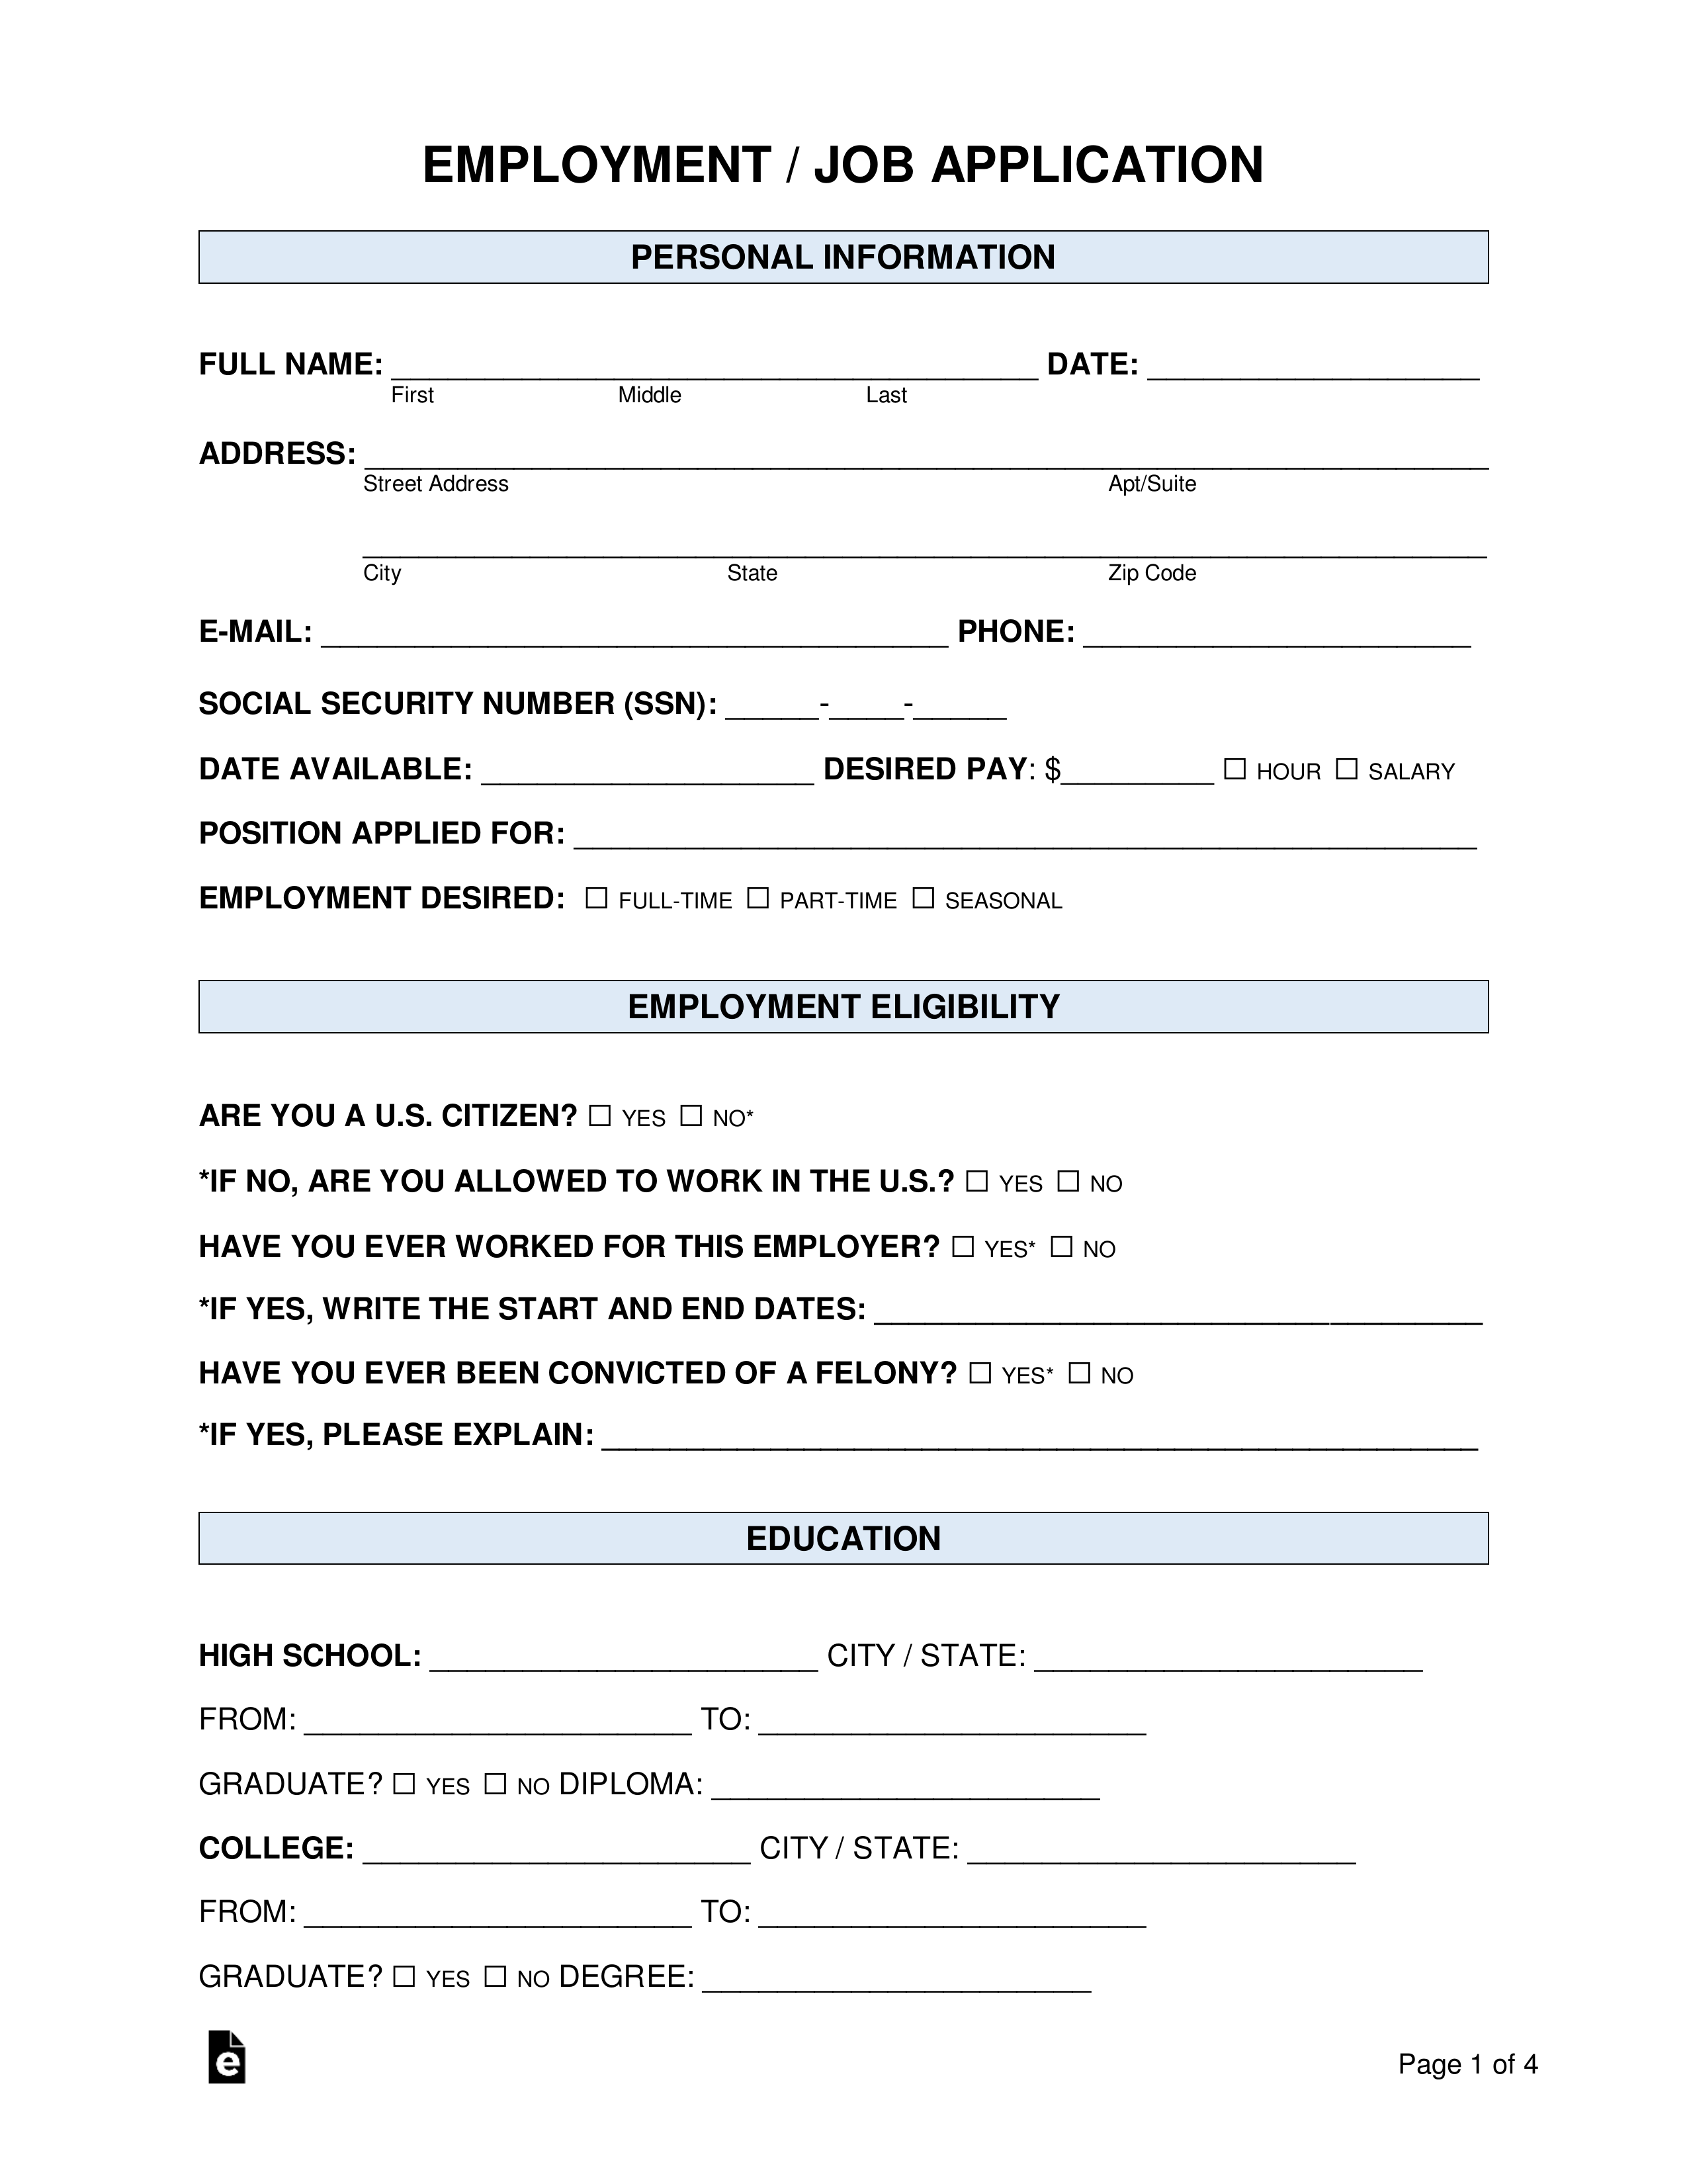 Application form download for job